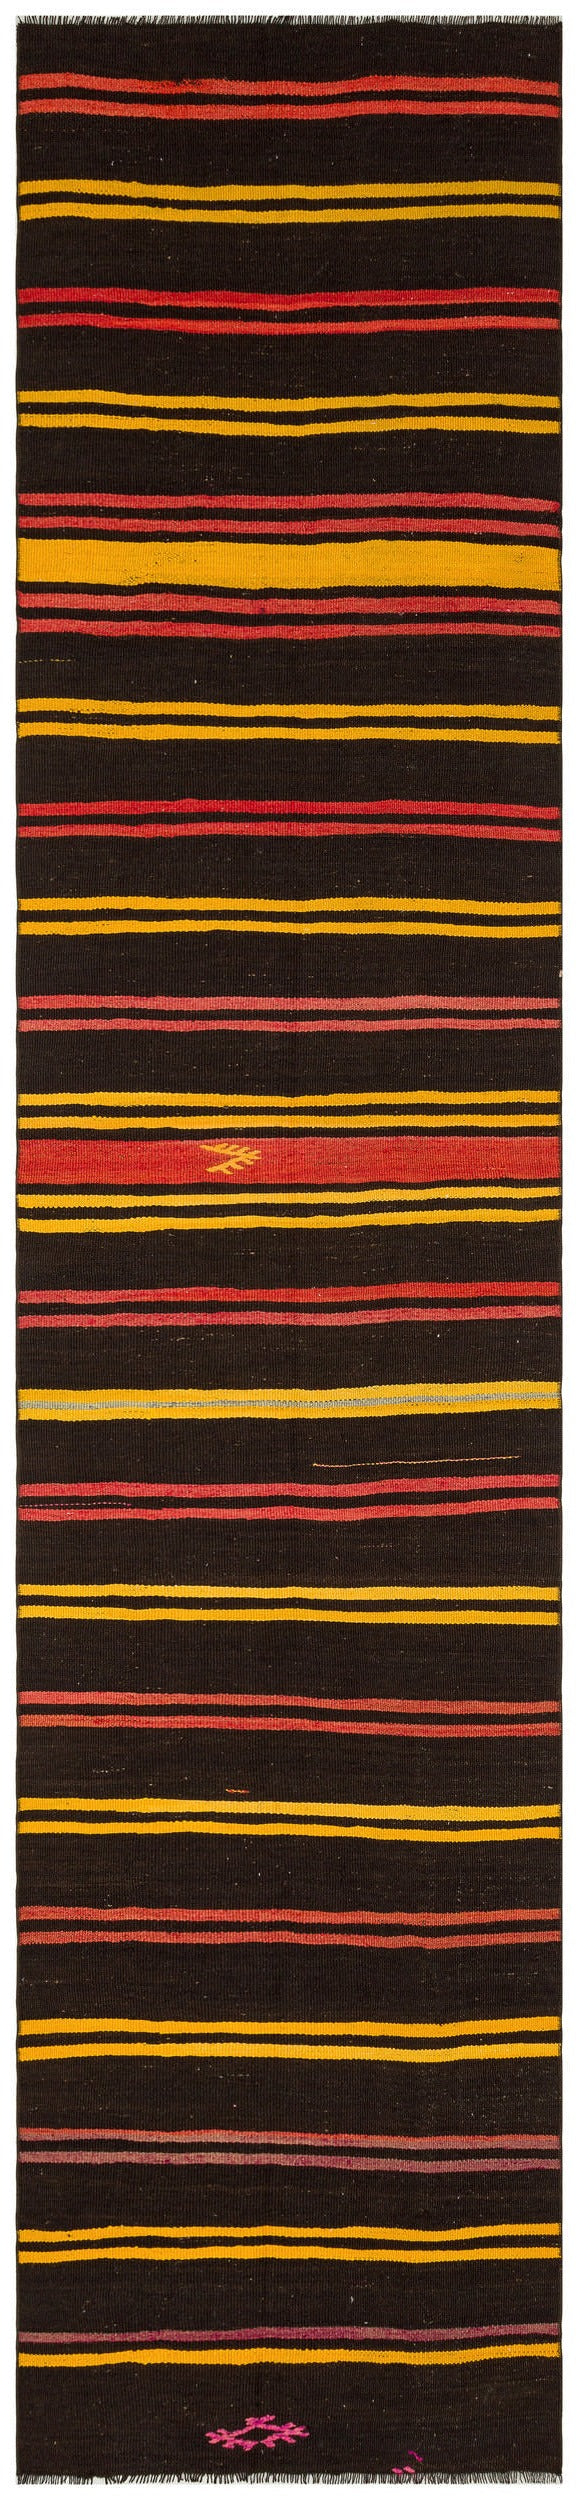 Cretan Brown Striped Wool Hand-Woven Carpet 088 x 388